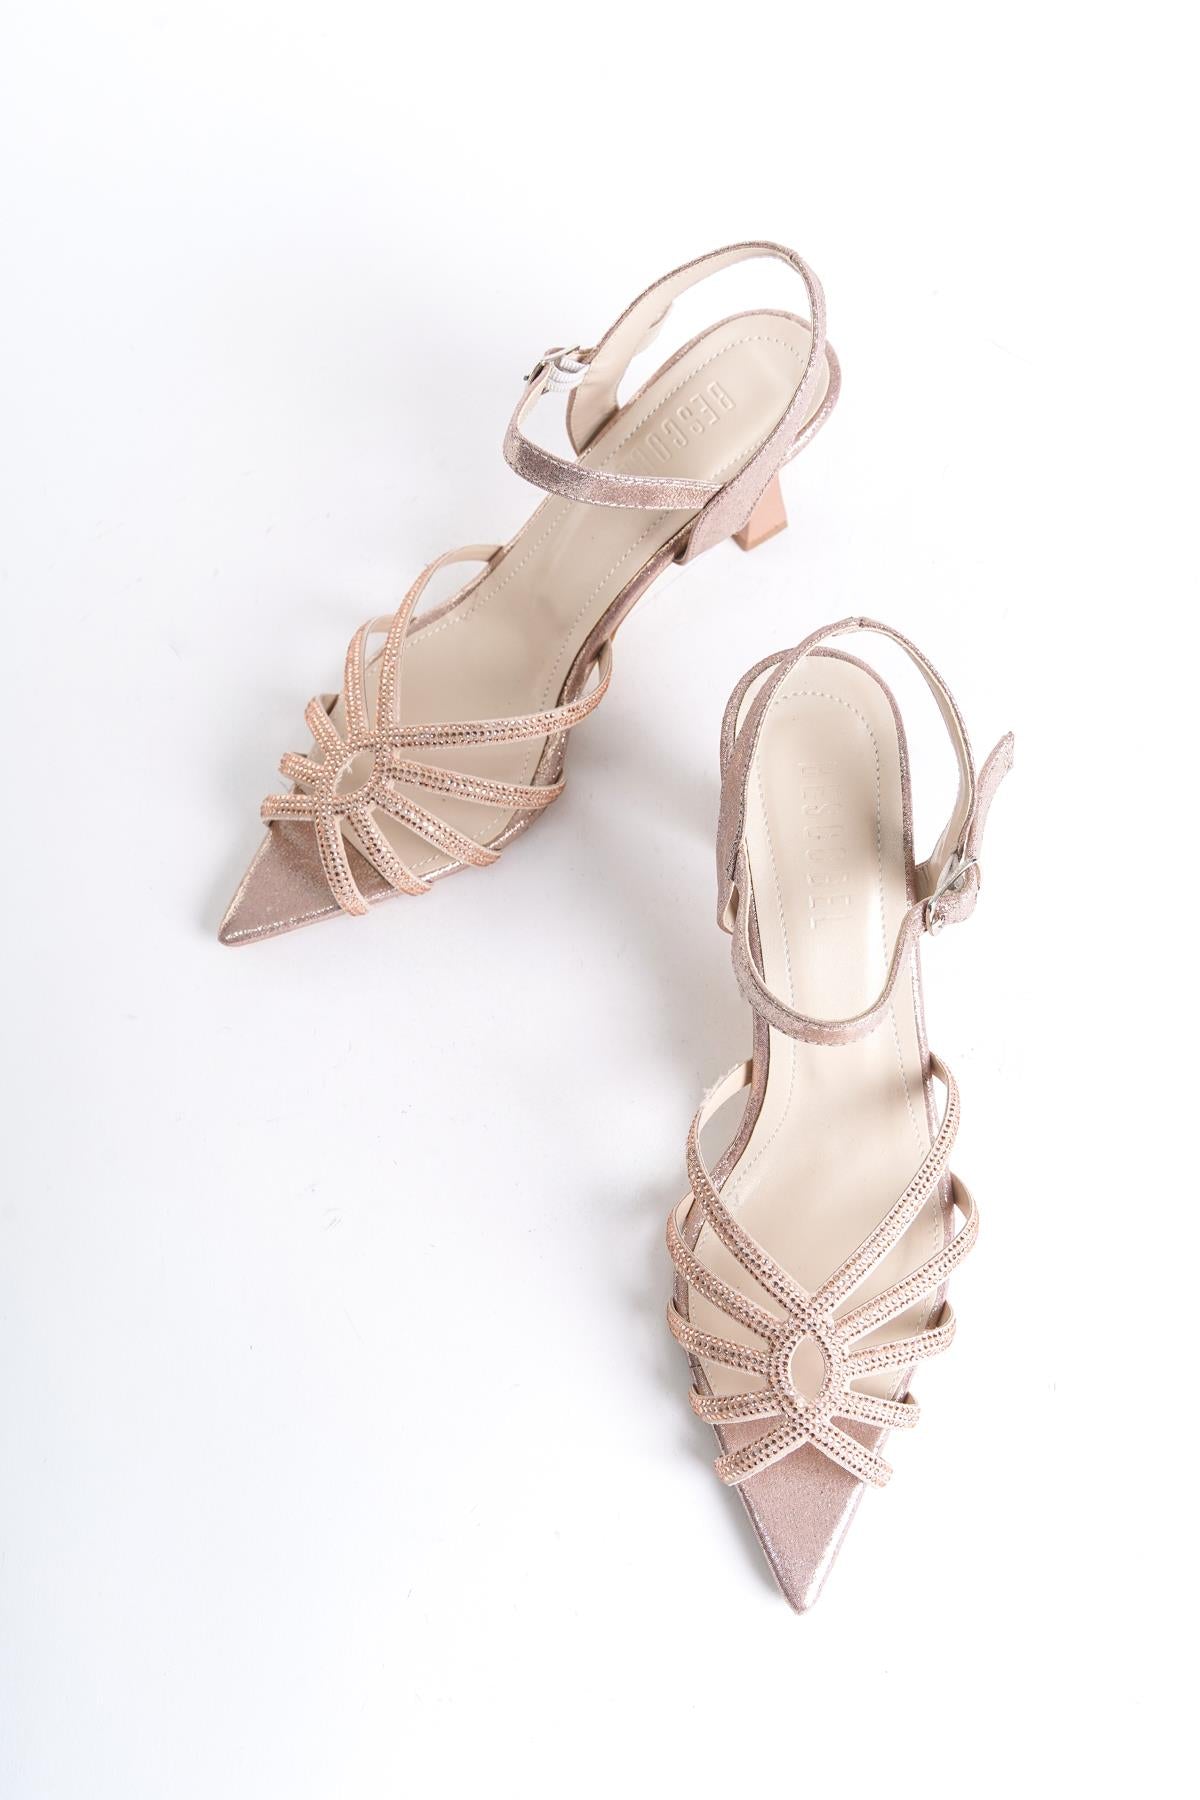 Women's Powder Thin Heel Pointed Toe Evening Dress Shoes 8 Cm Heel - STREETMODE™